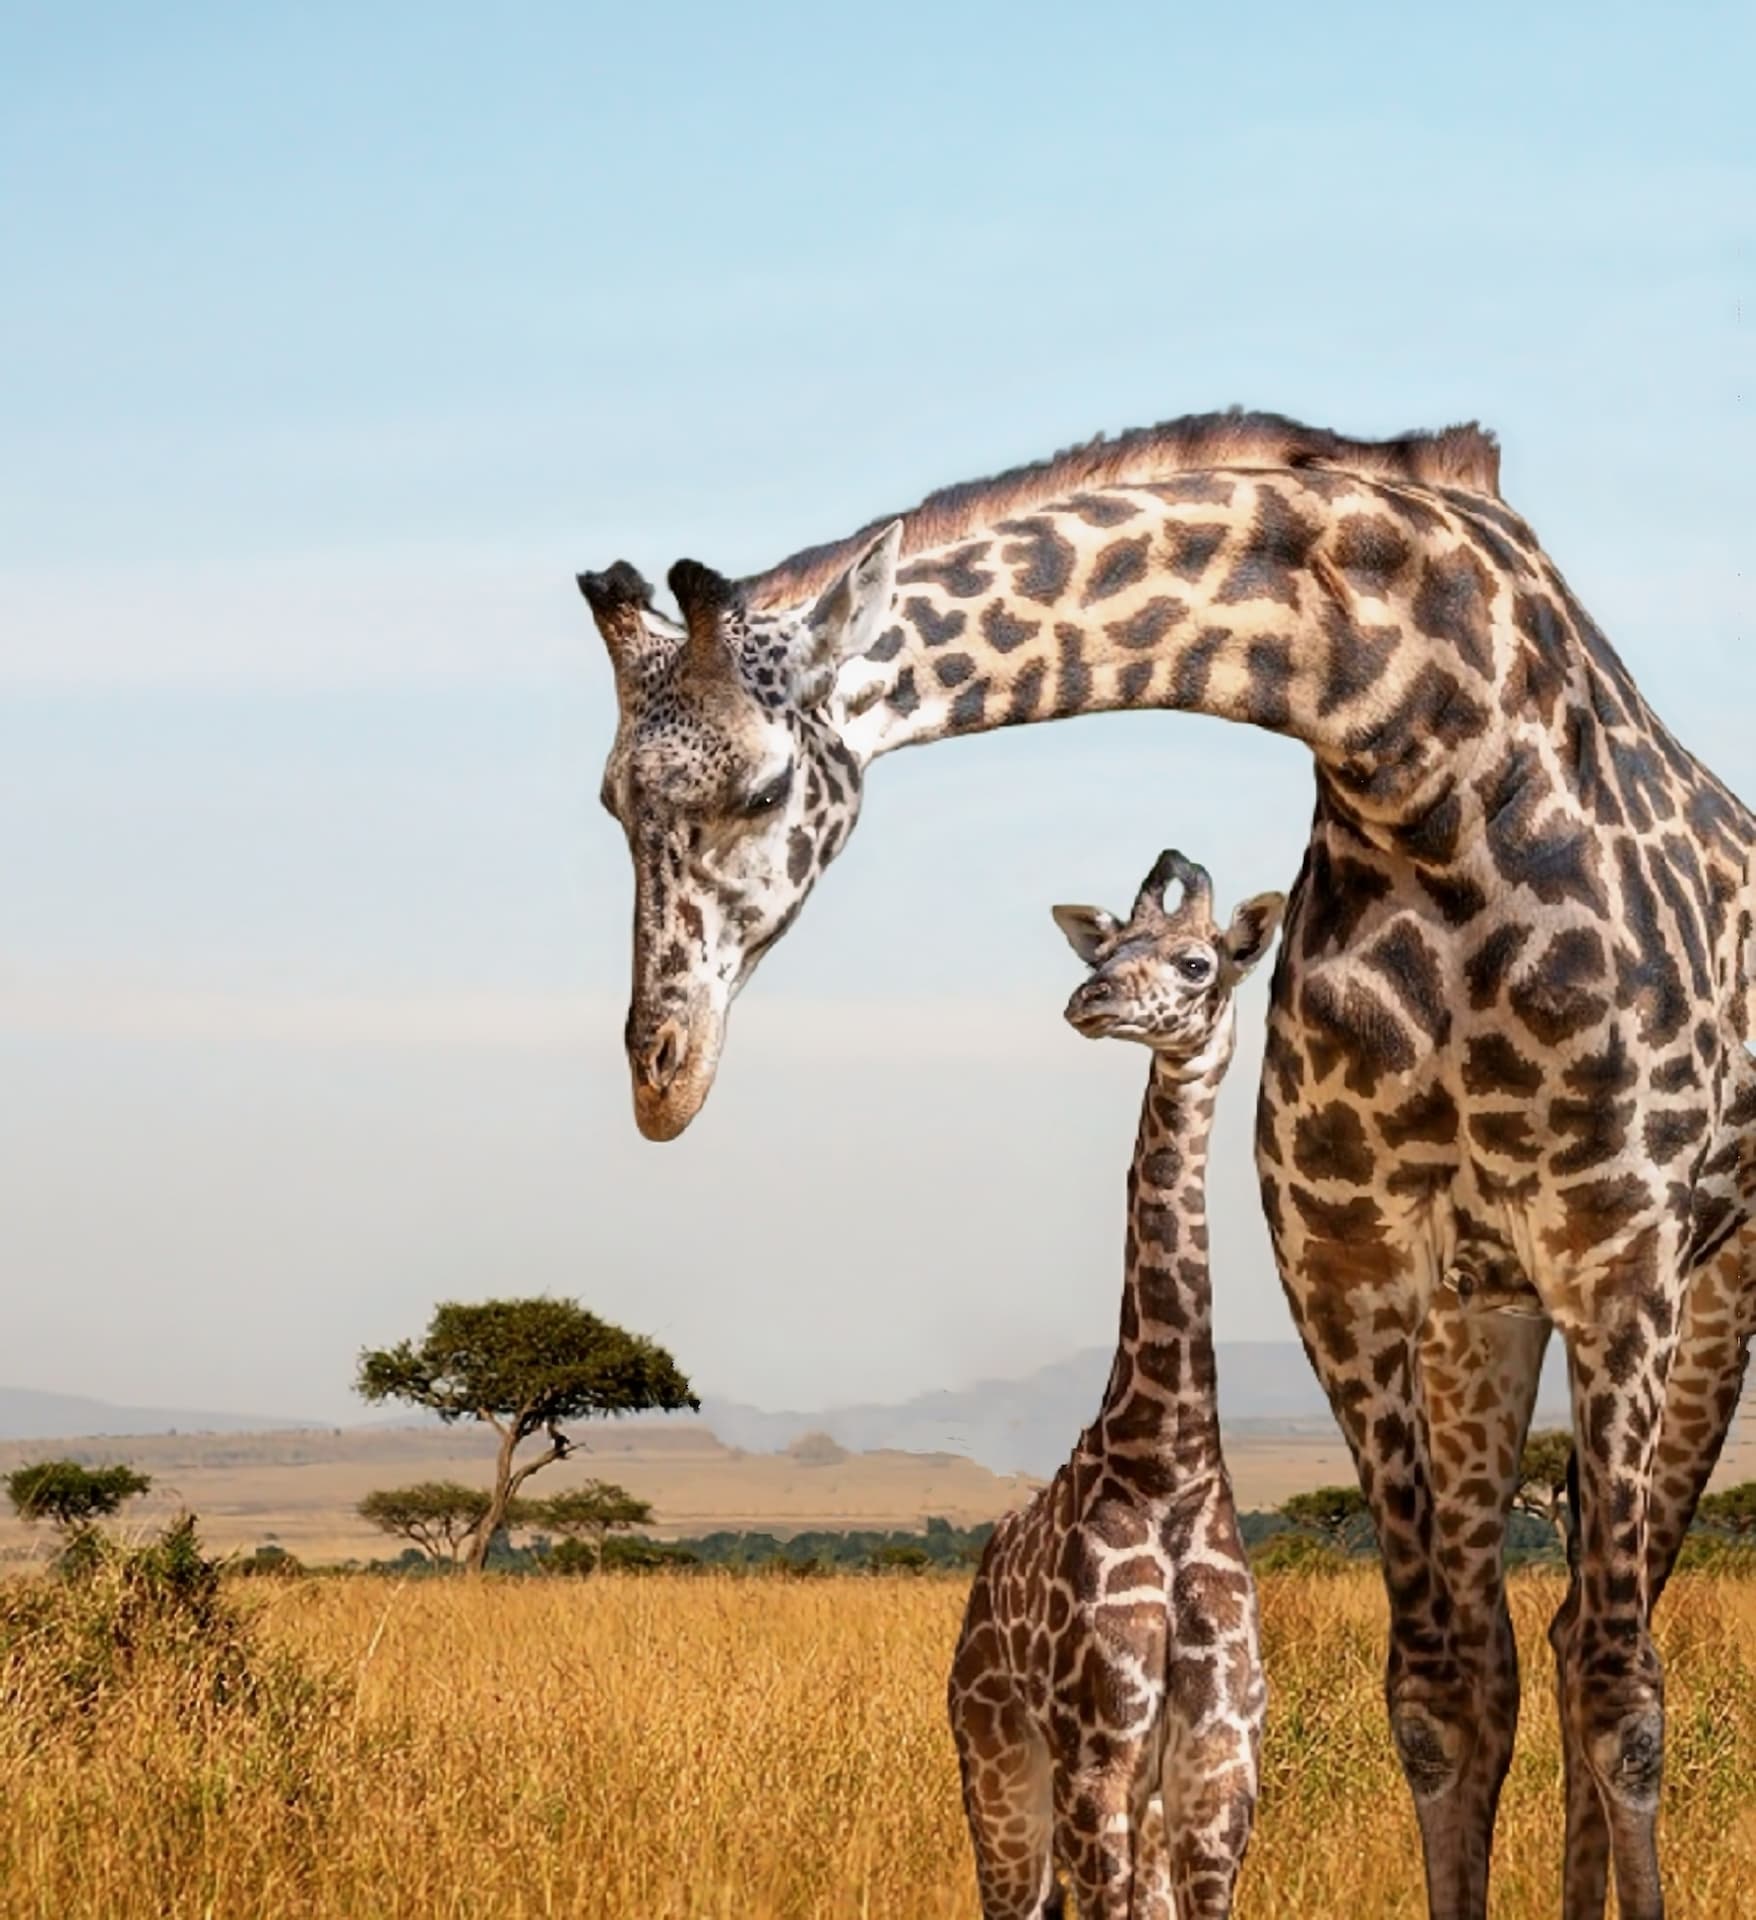 Mother giraffe and baby giraffe standing together on an African safari